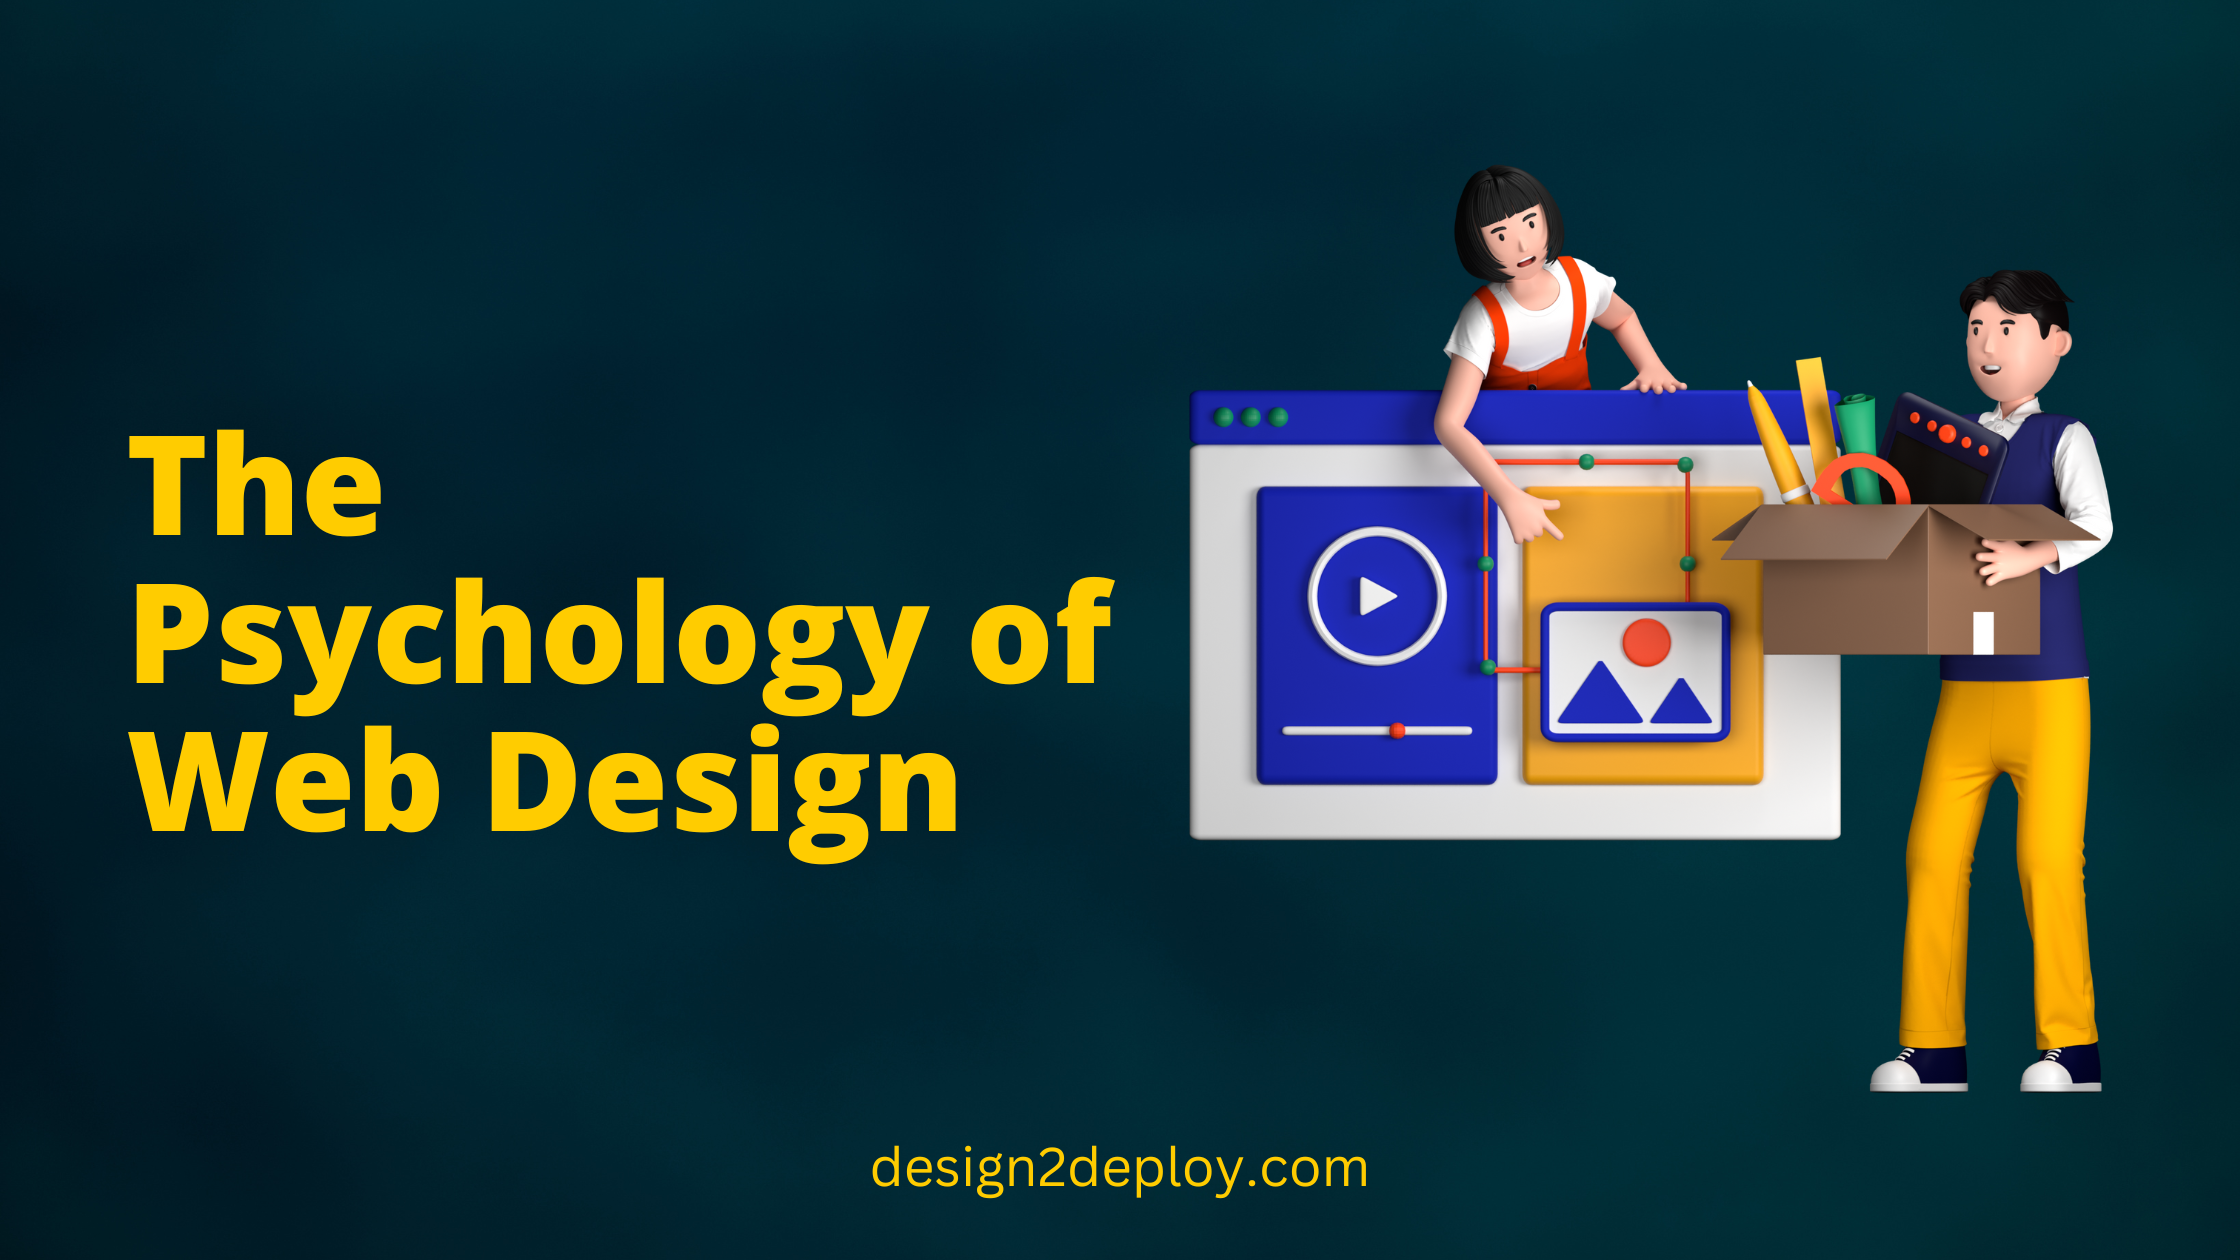 The Psychology of Web Design